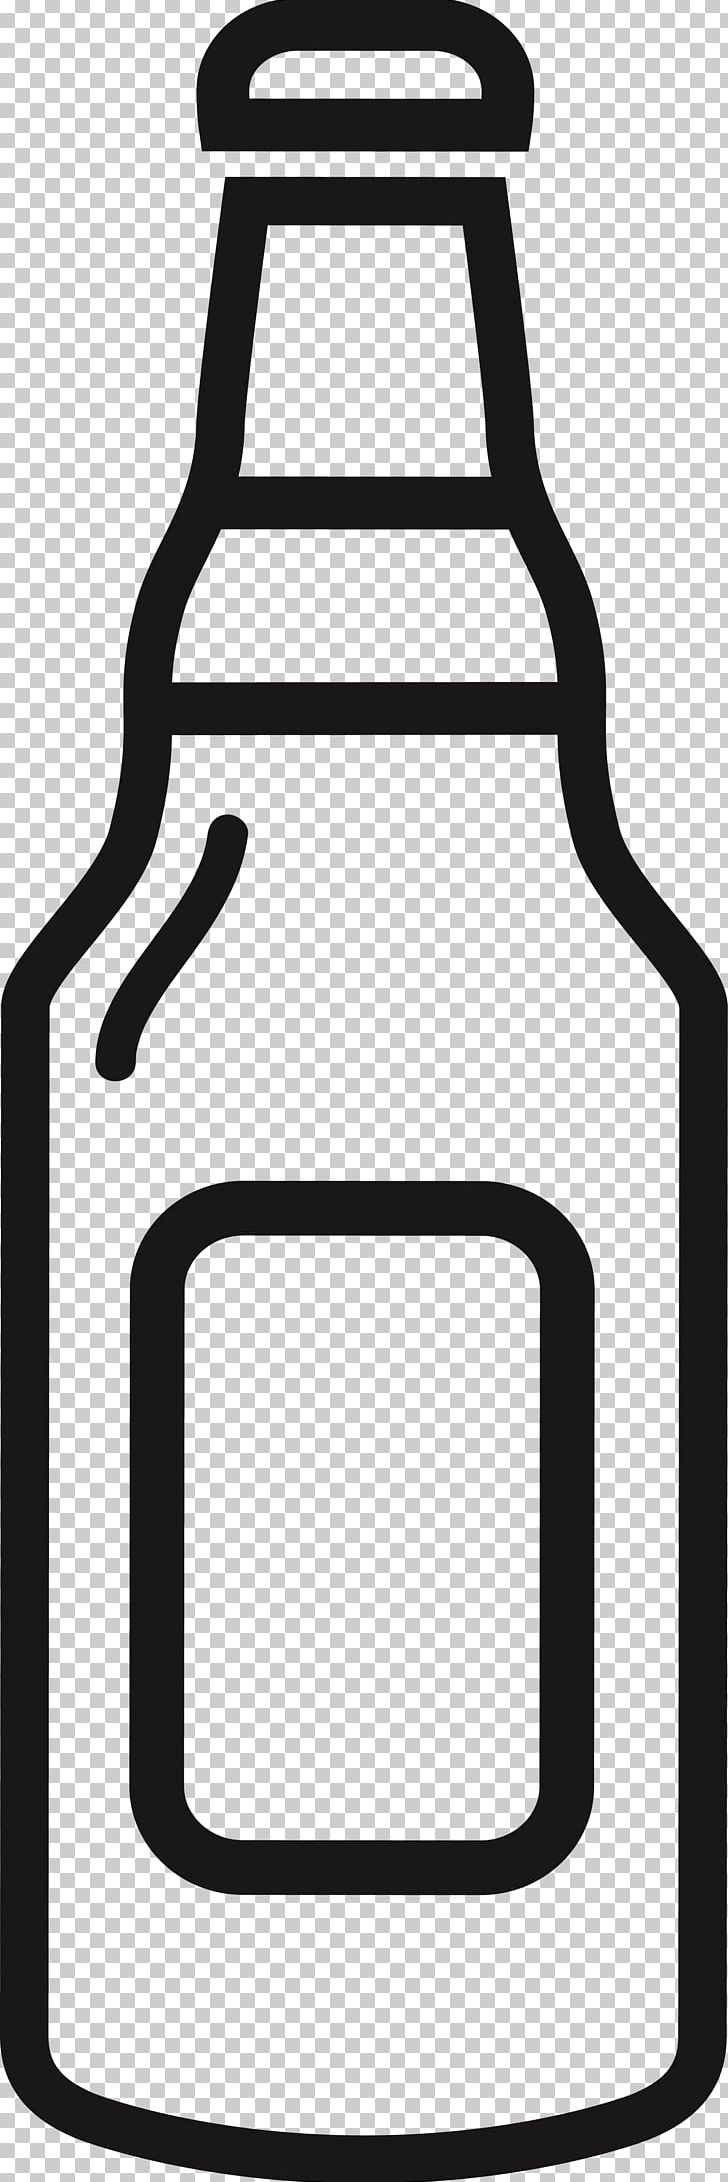 Beer Bottle Draught Beer PNG, Clipart, Angle, Beer, Beer Bottle, Black, Black And White Free PNG Download